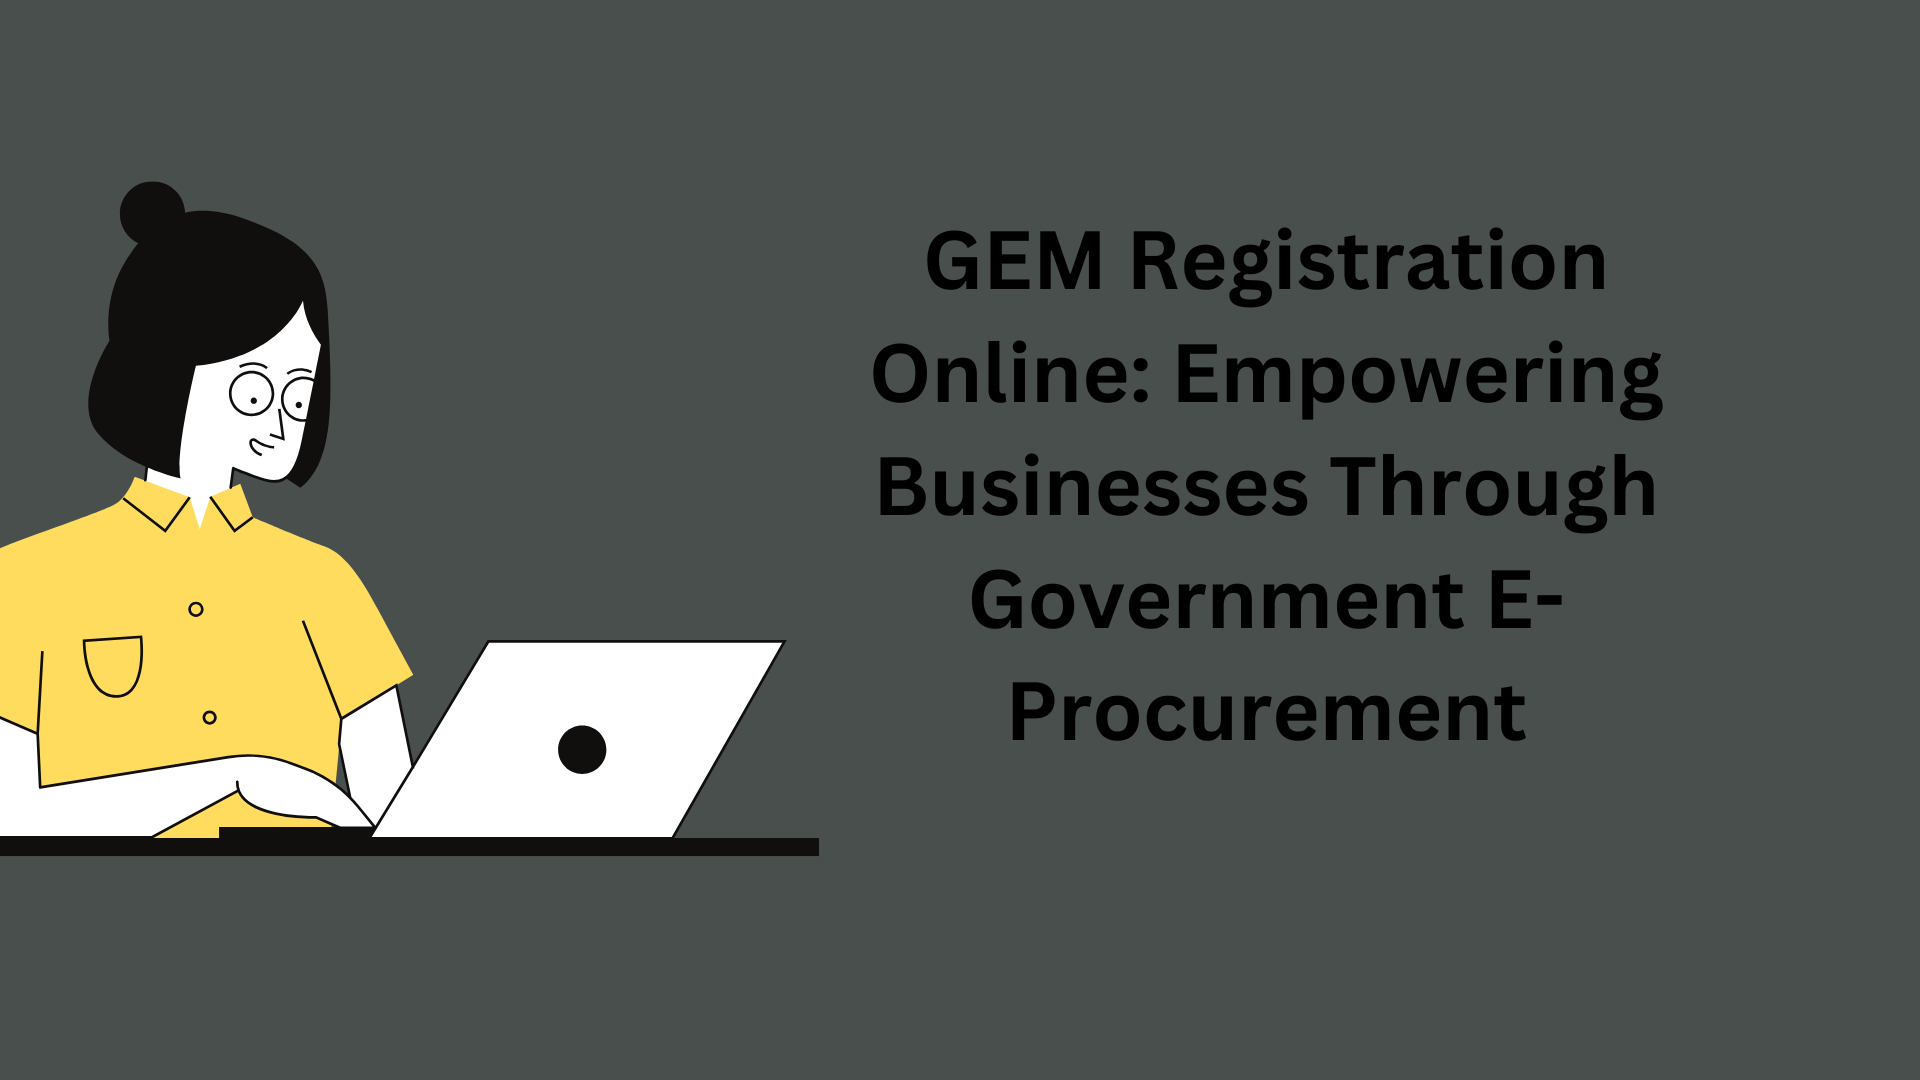 GEM Registration Online: Empowering Businesses Through Government E-Procurement